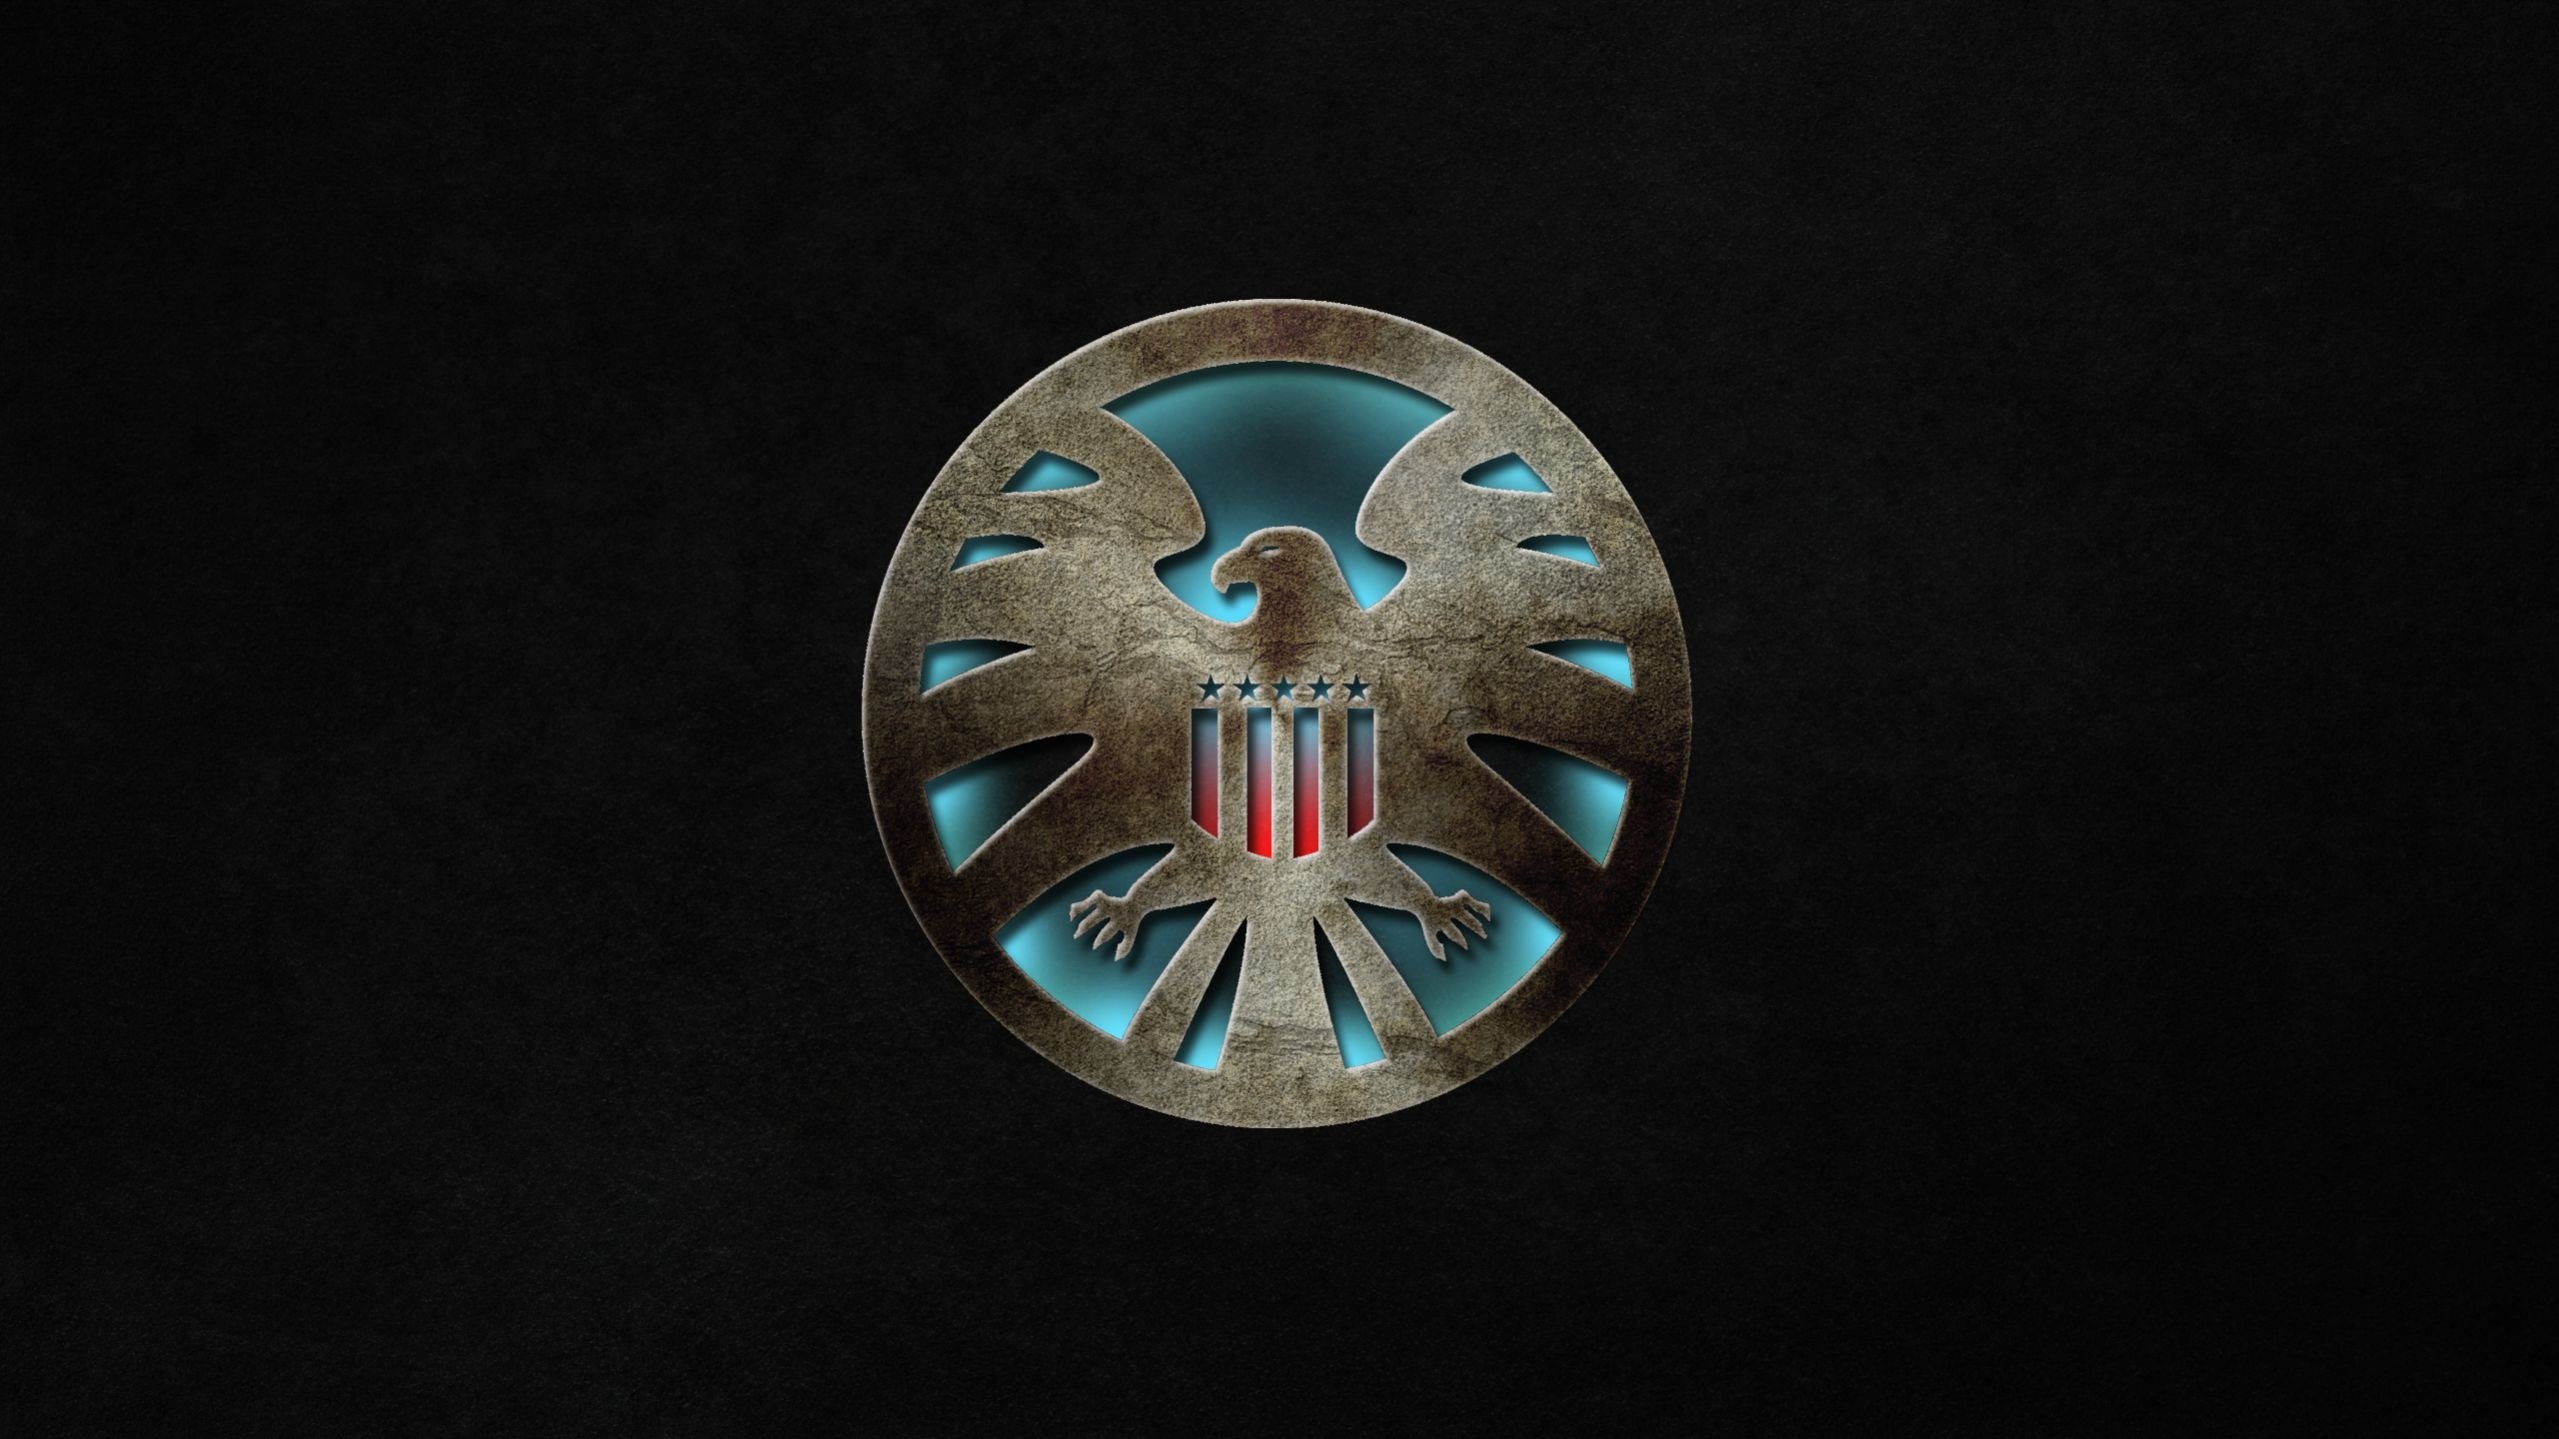 Marvel shield logo iphone wallpaper